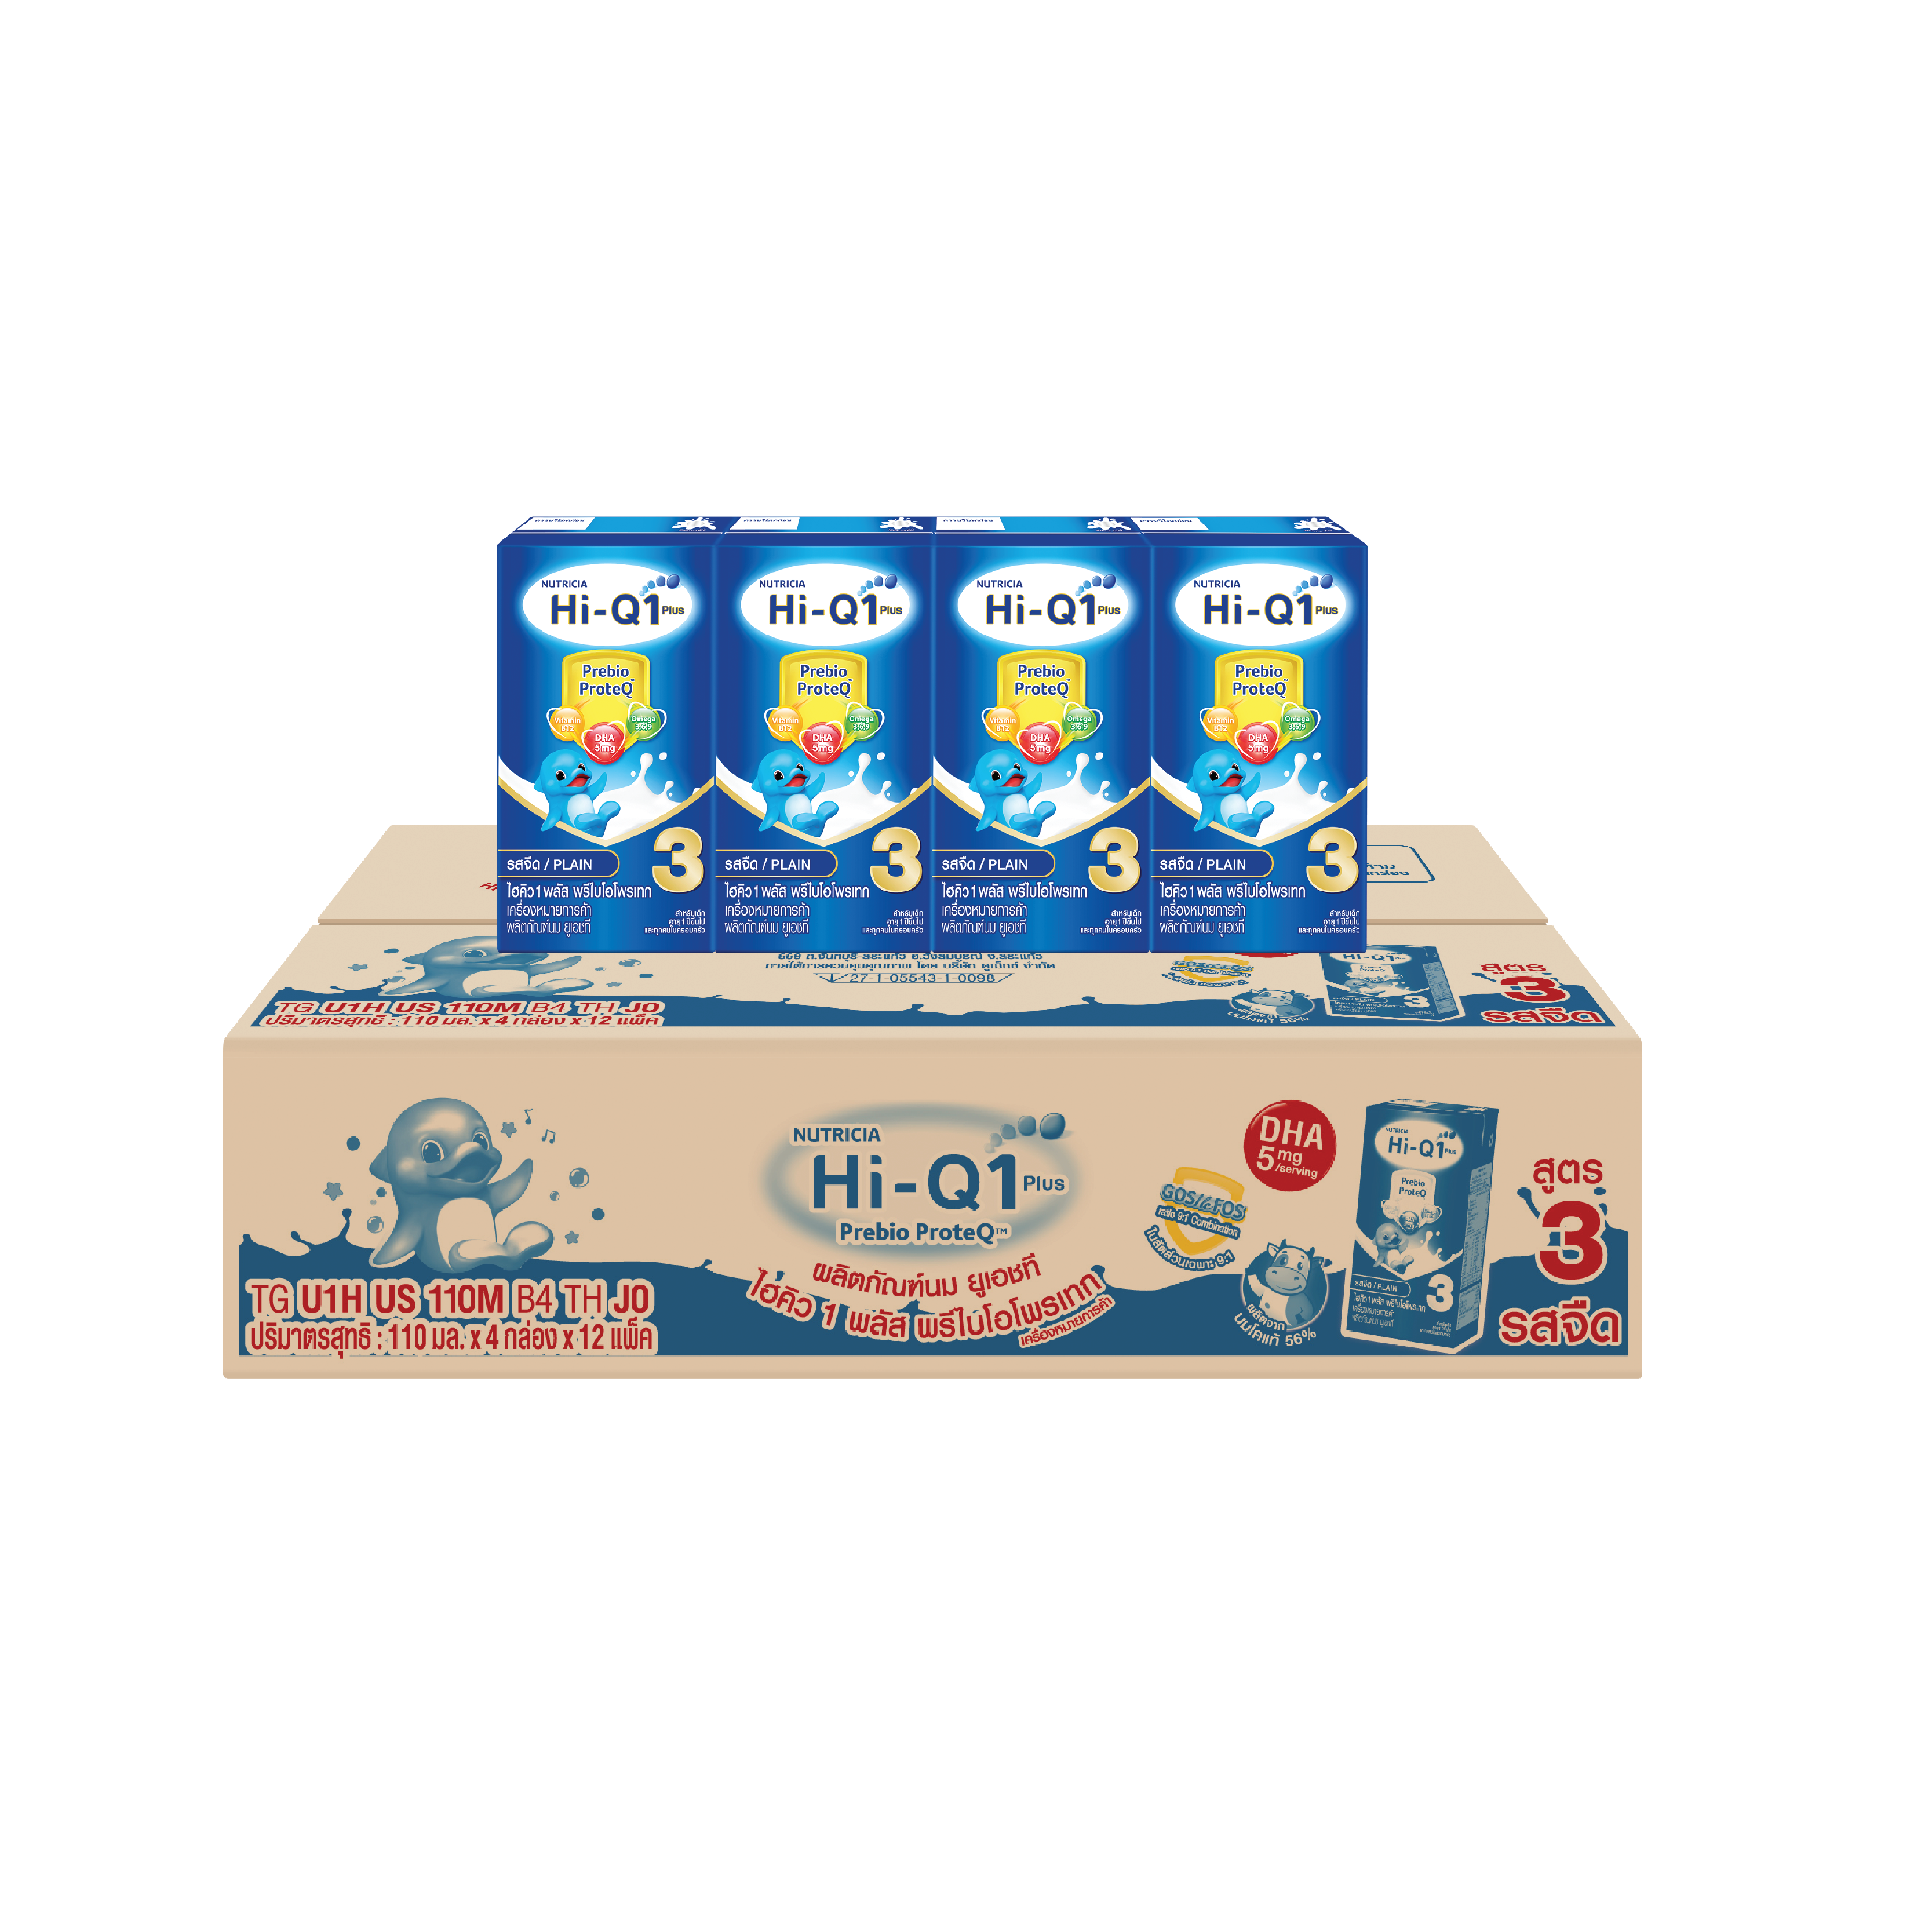 Hiคิว 1 พลัส นมยูเอชที รสจืด 110 มล. x 48 กล่อง/Hiคิว 1 Plus UHT Milk Plain Flavor 110ml x 48 boxes